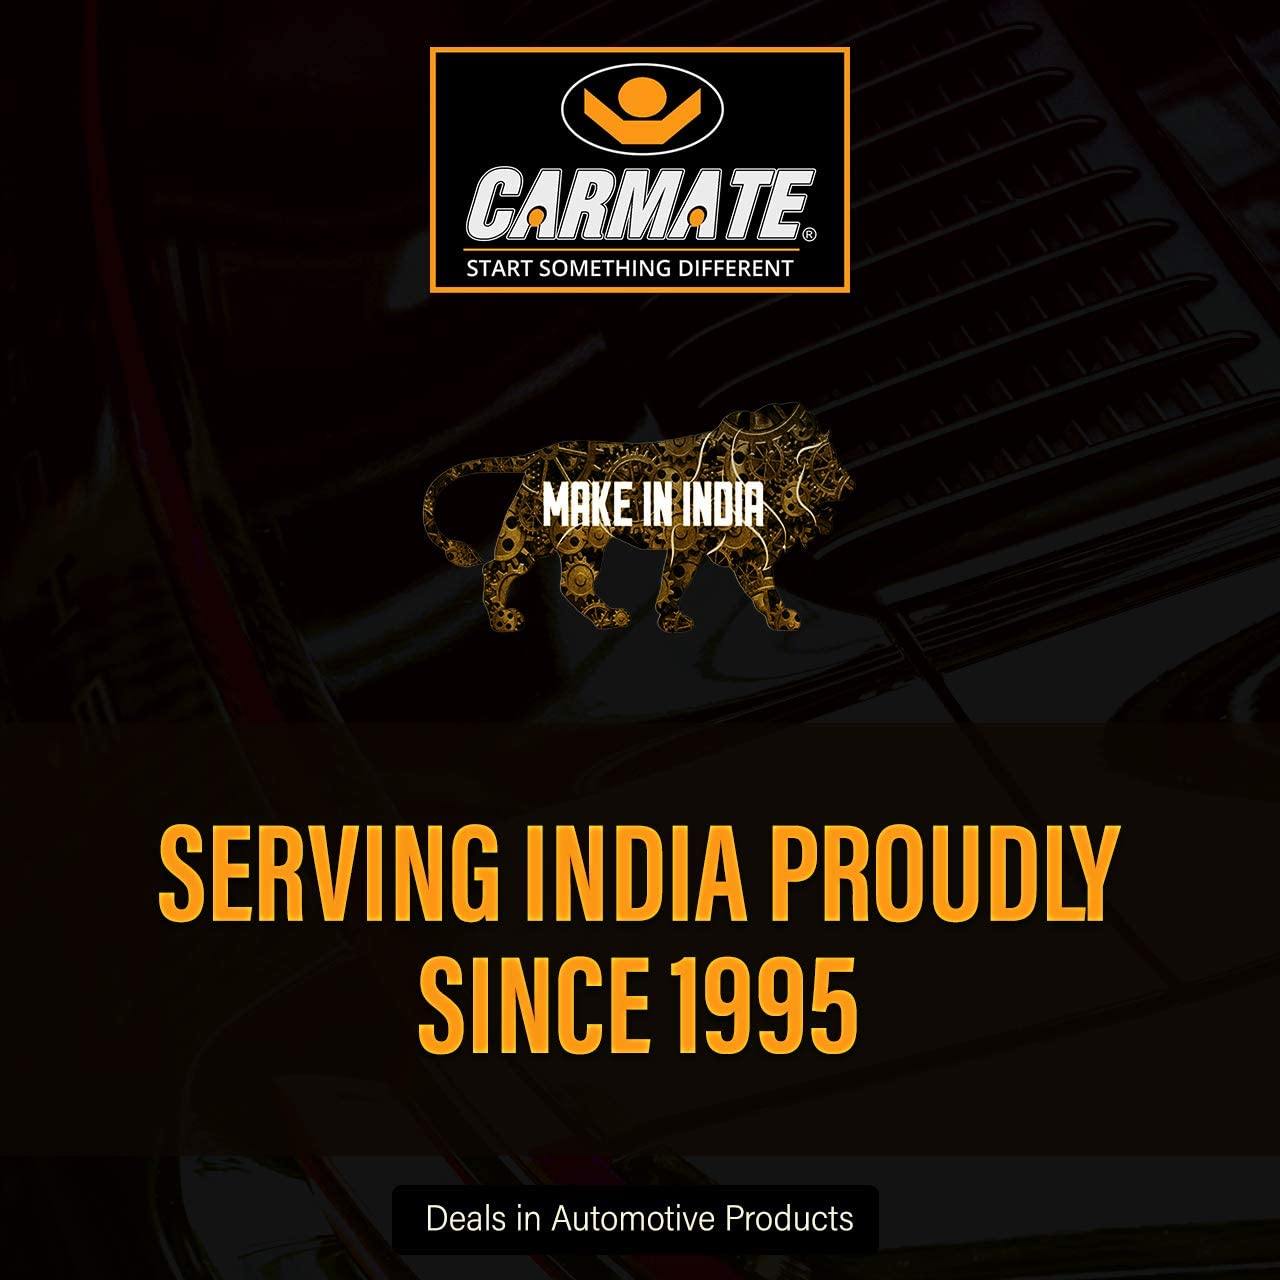 Carmate Passion Car Body Cover (Black and Orange) for Maruti - Old Swift - CARMATE®